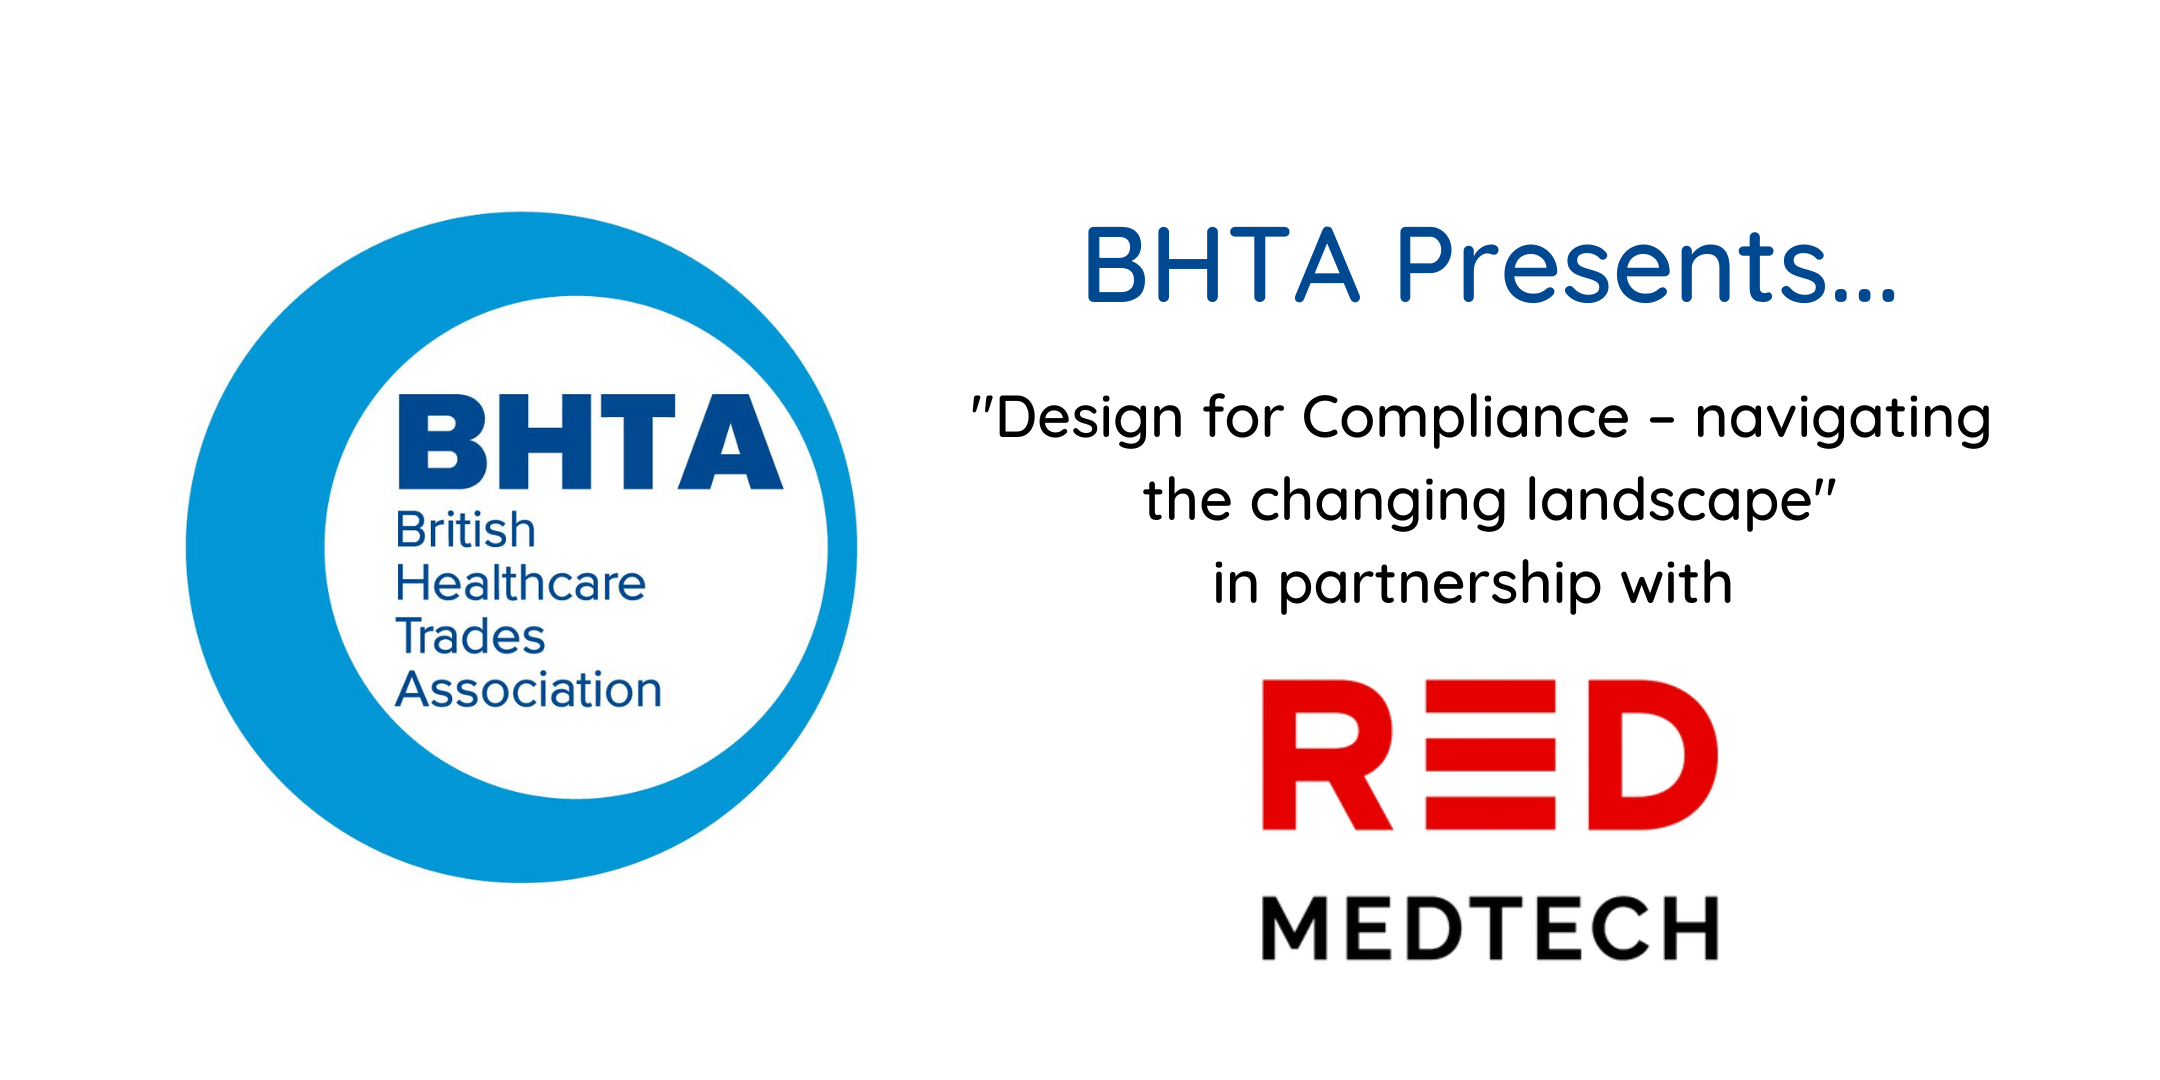 BHTA presents... 'Design for Compliance - navigating the changing landscape'